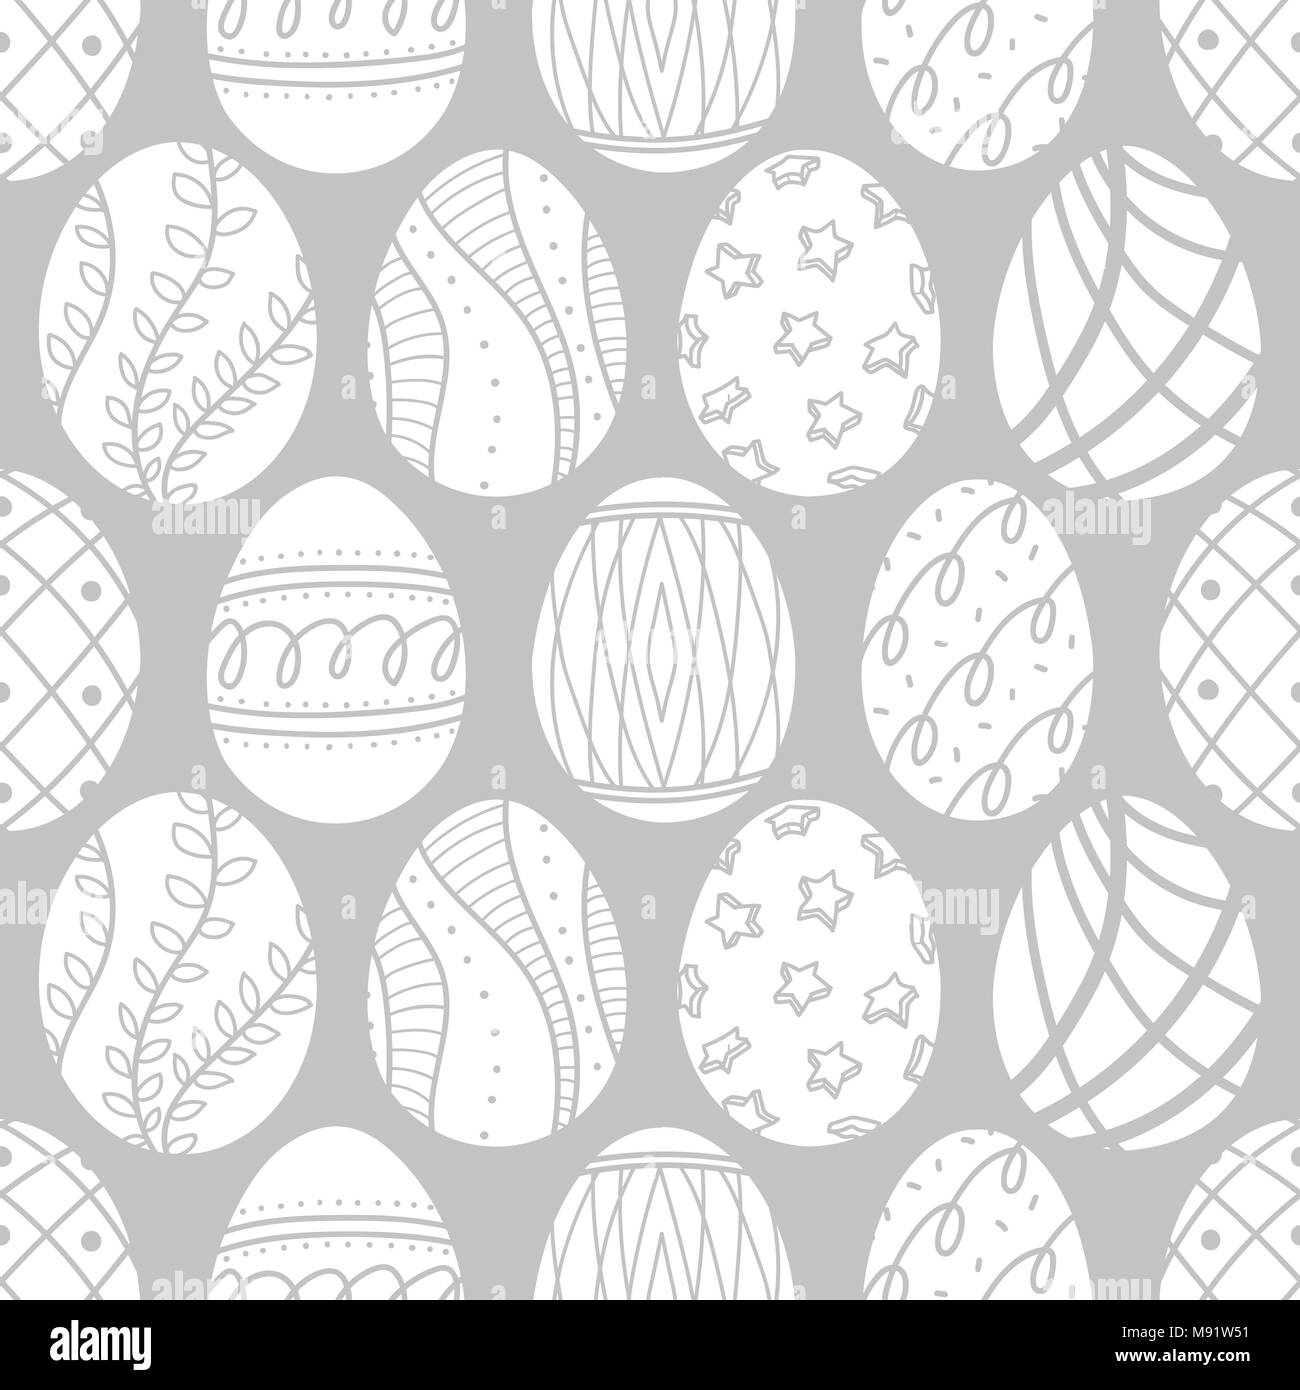 Easter eggs in white silhouette line up on light gray background. Cute hand drawn seamless pattern design for Easter festival in vector illustration. Stock Vector